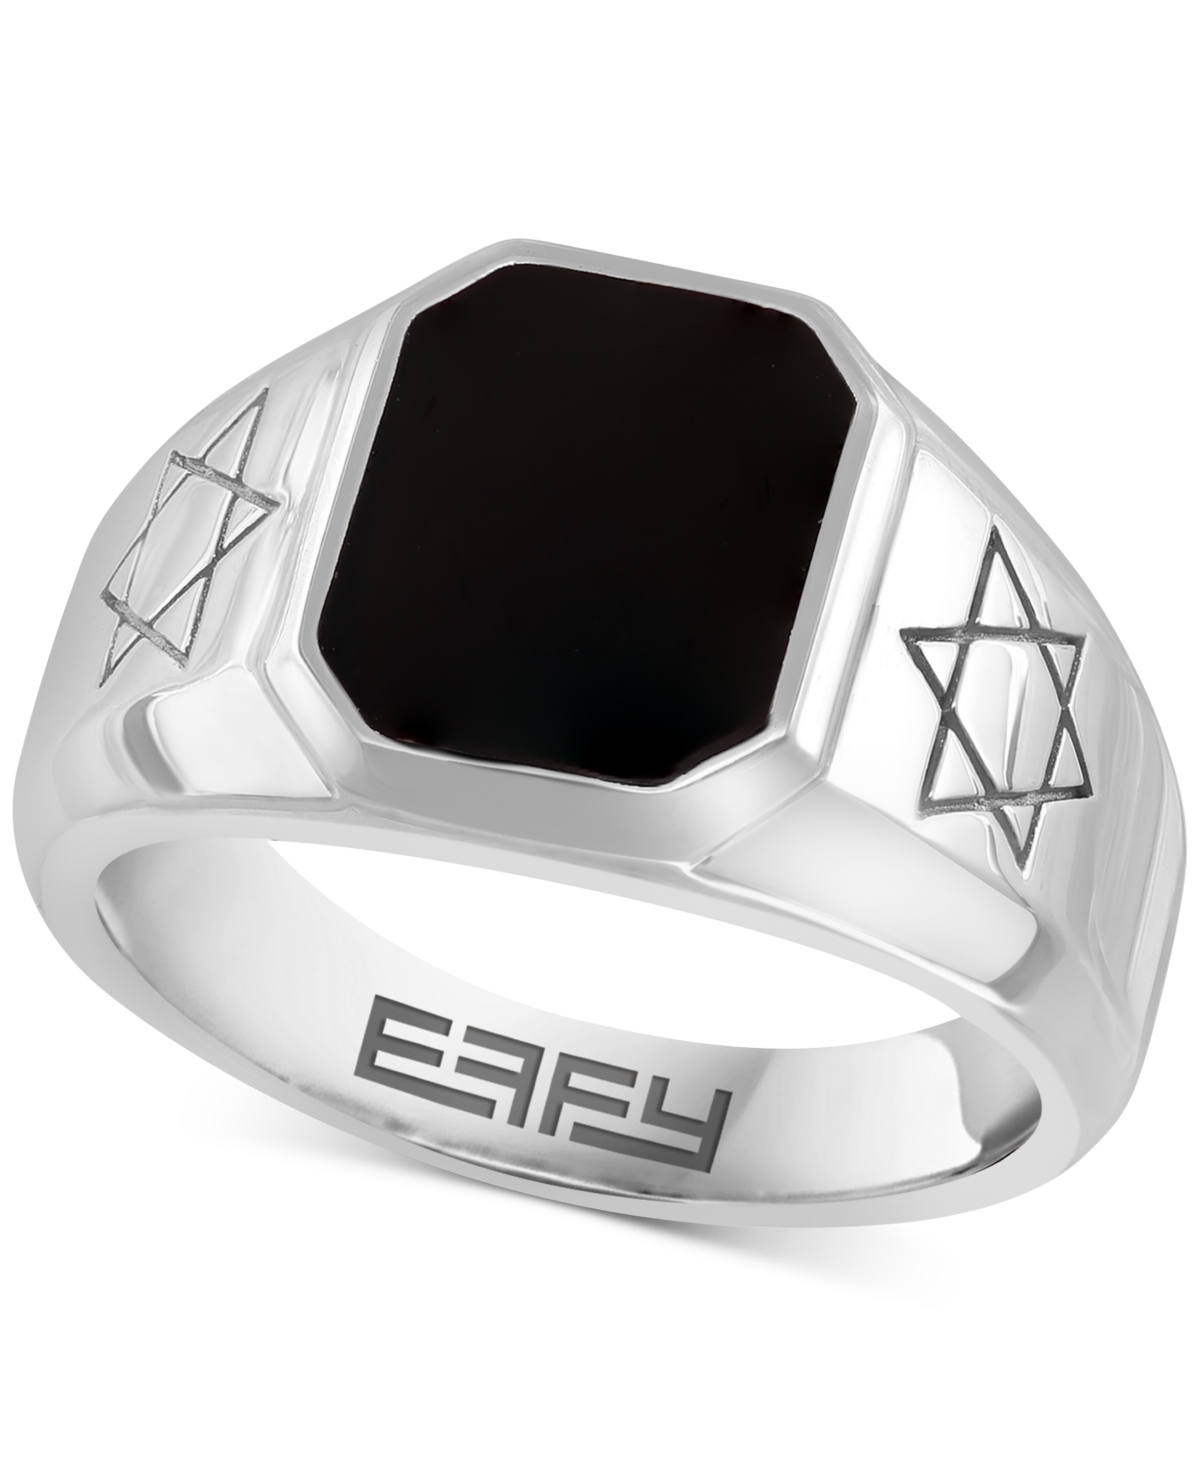 Effy Men's Onyx Star of David Engraved Ring in Sterling Silver - Silver